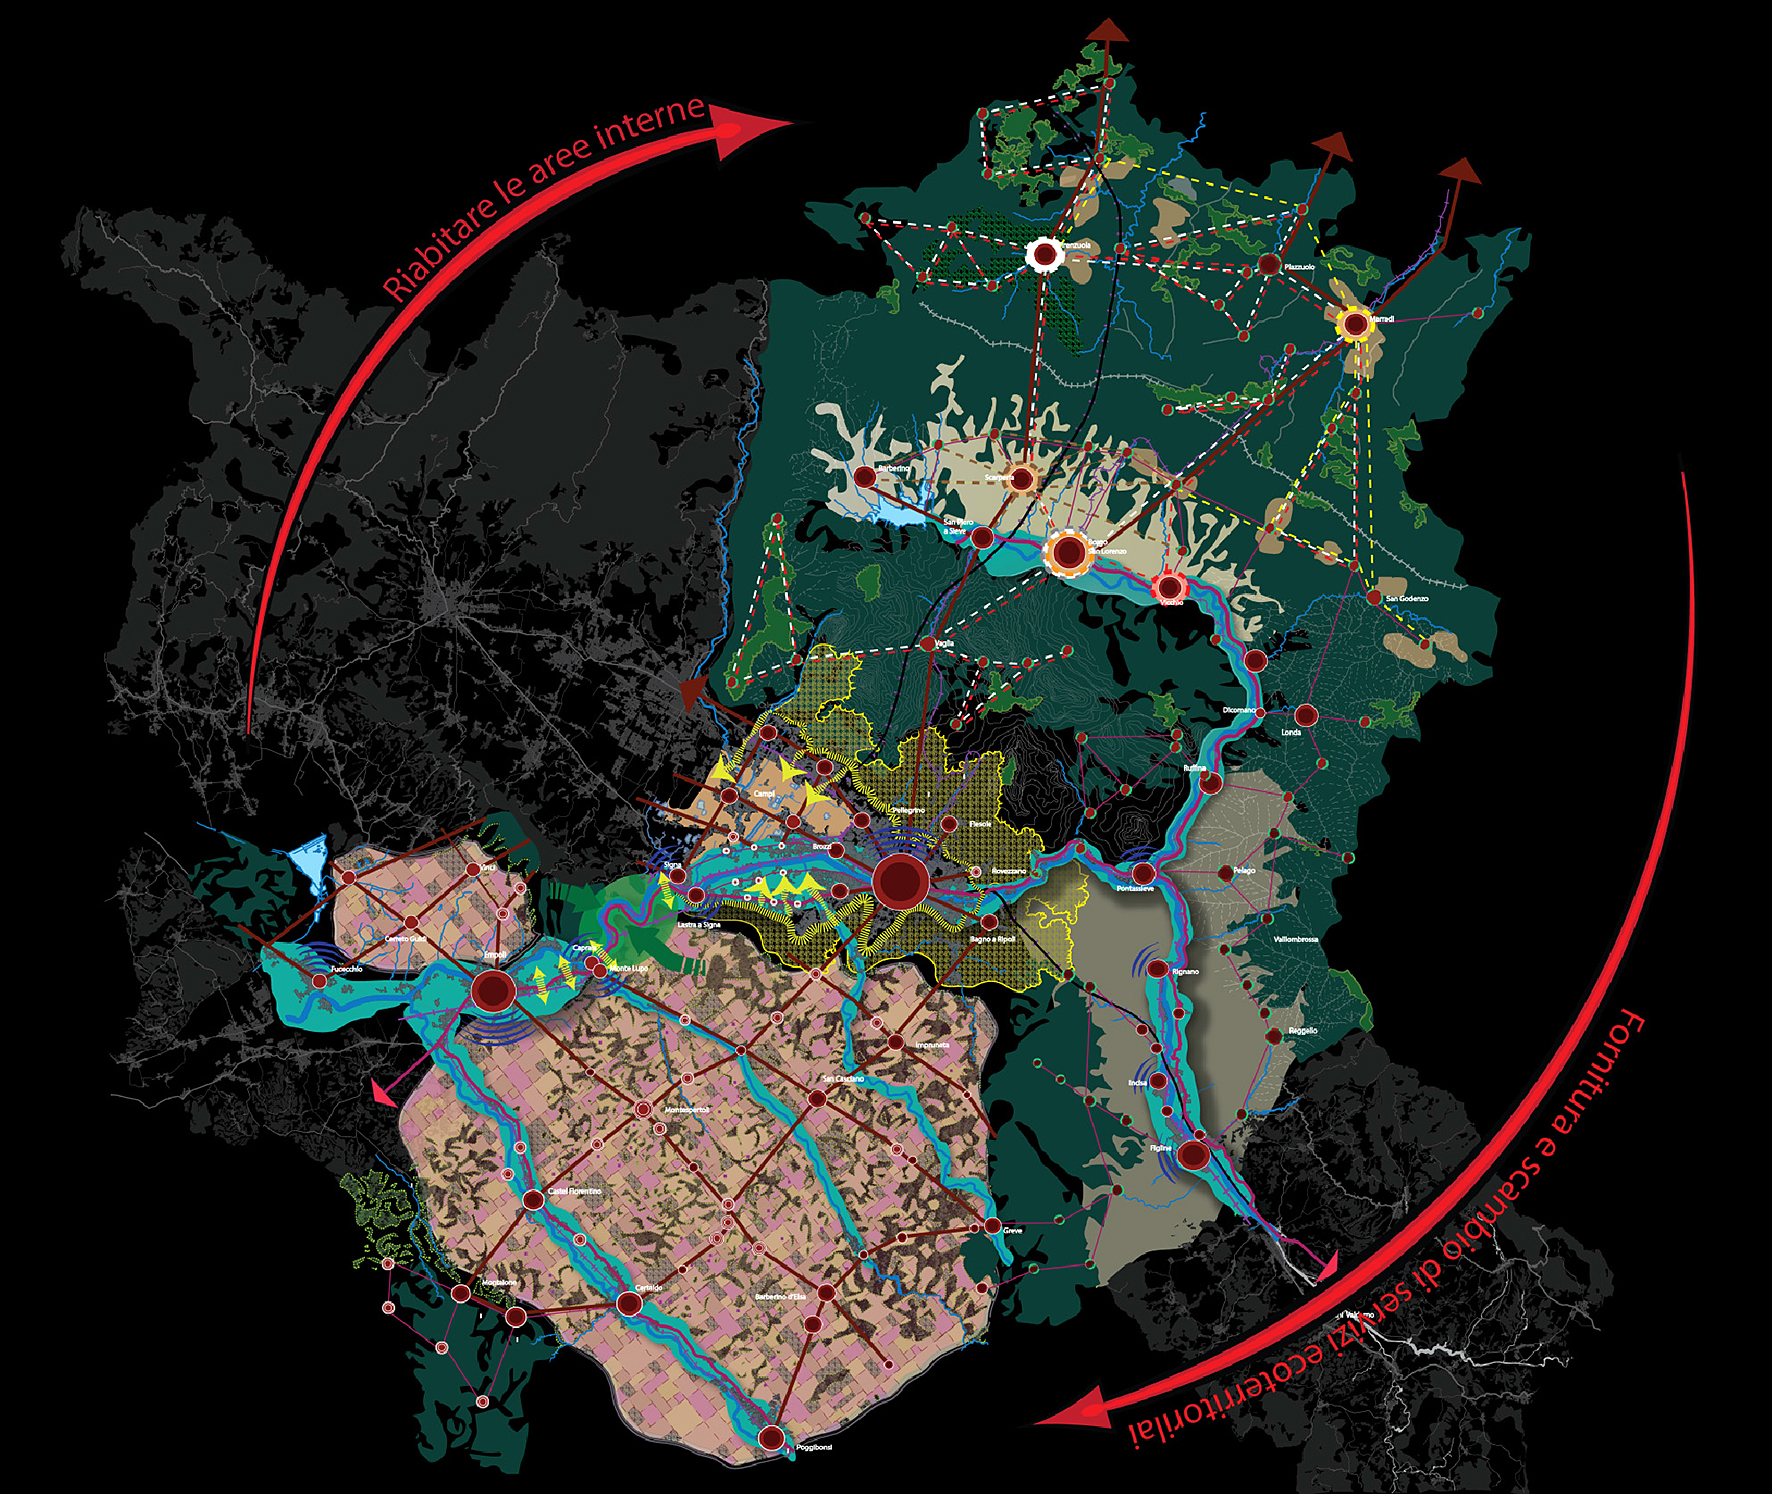 Florence metropolitan area as an urban bioregion; courtesy Daniela Poli.